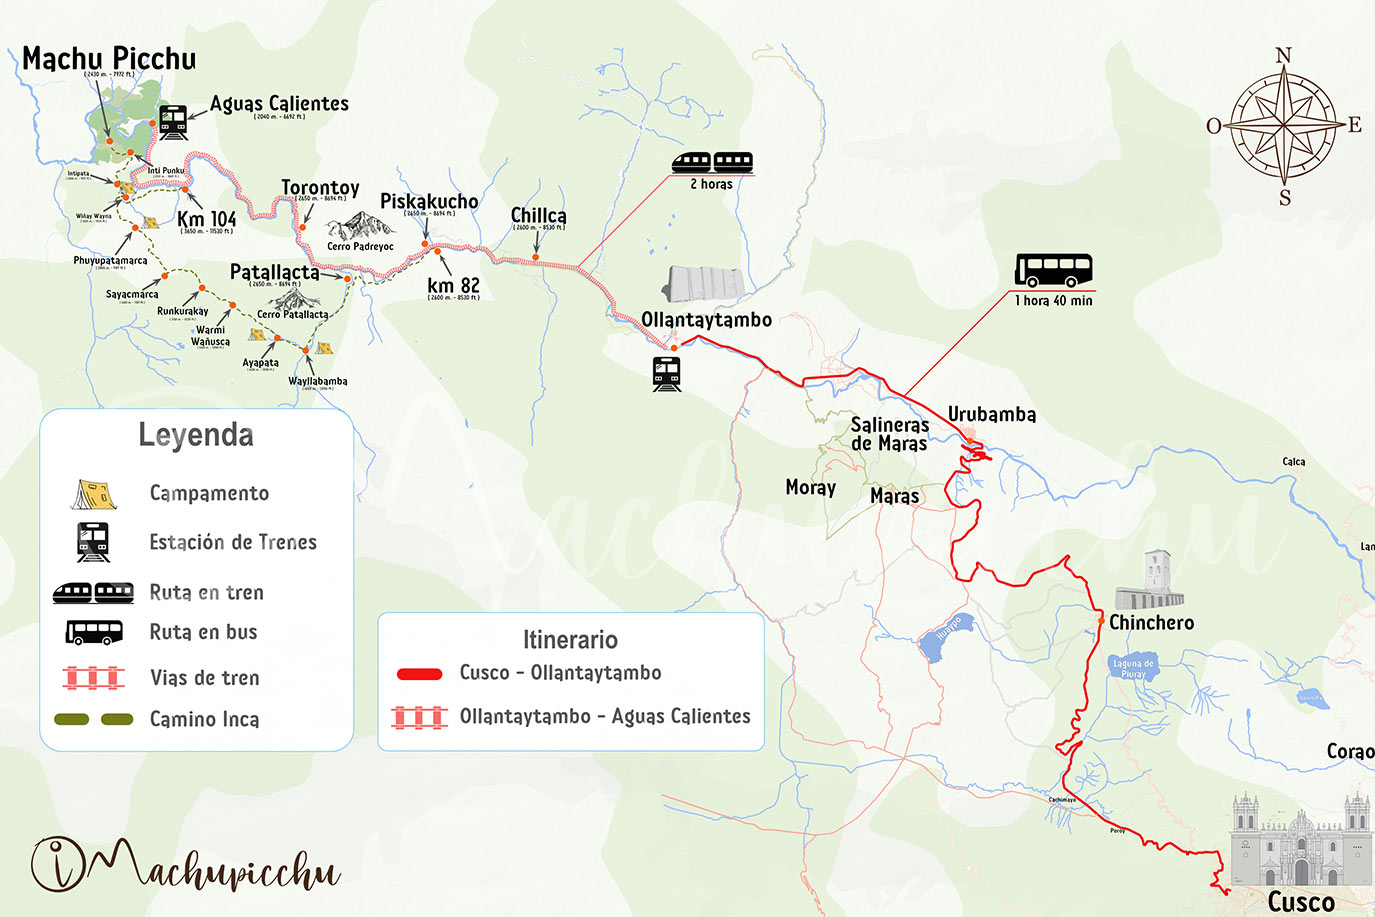 Mapa Viaje tren a Machu Picchu